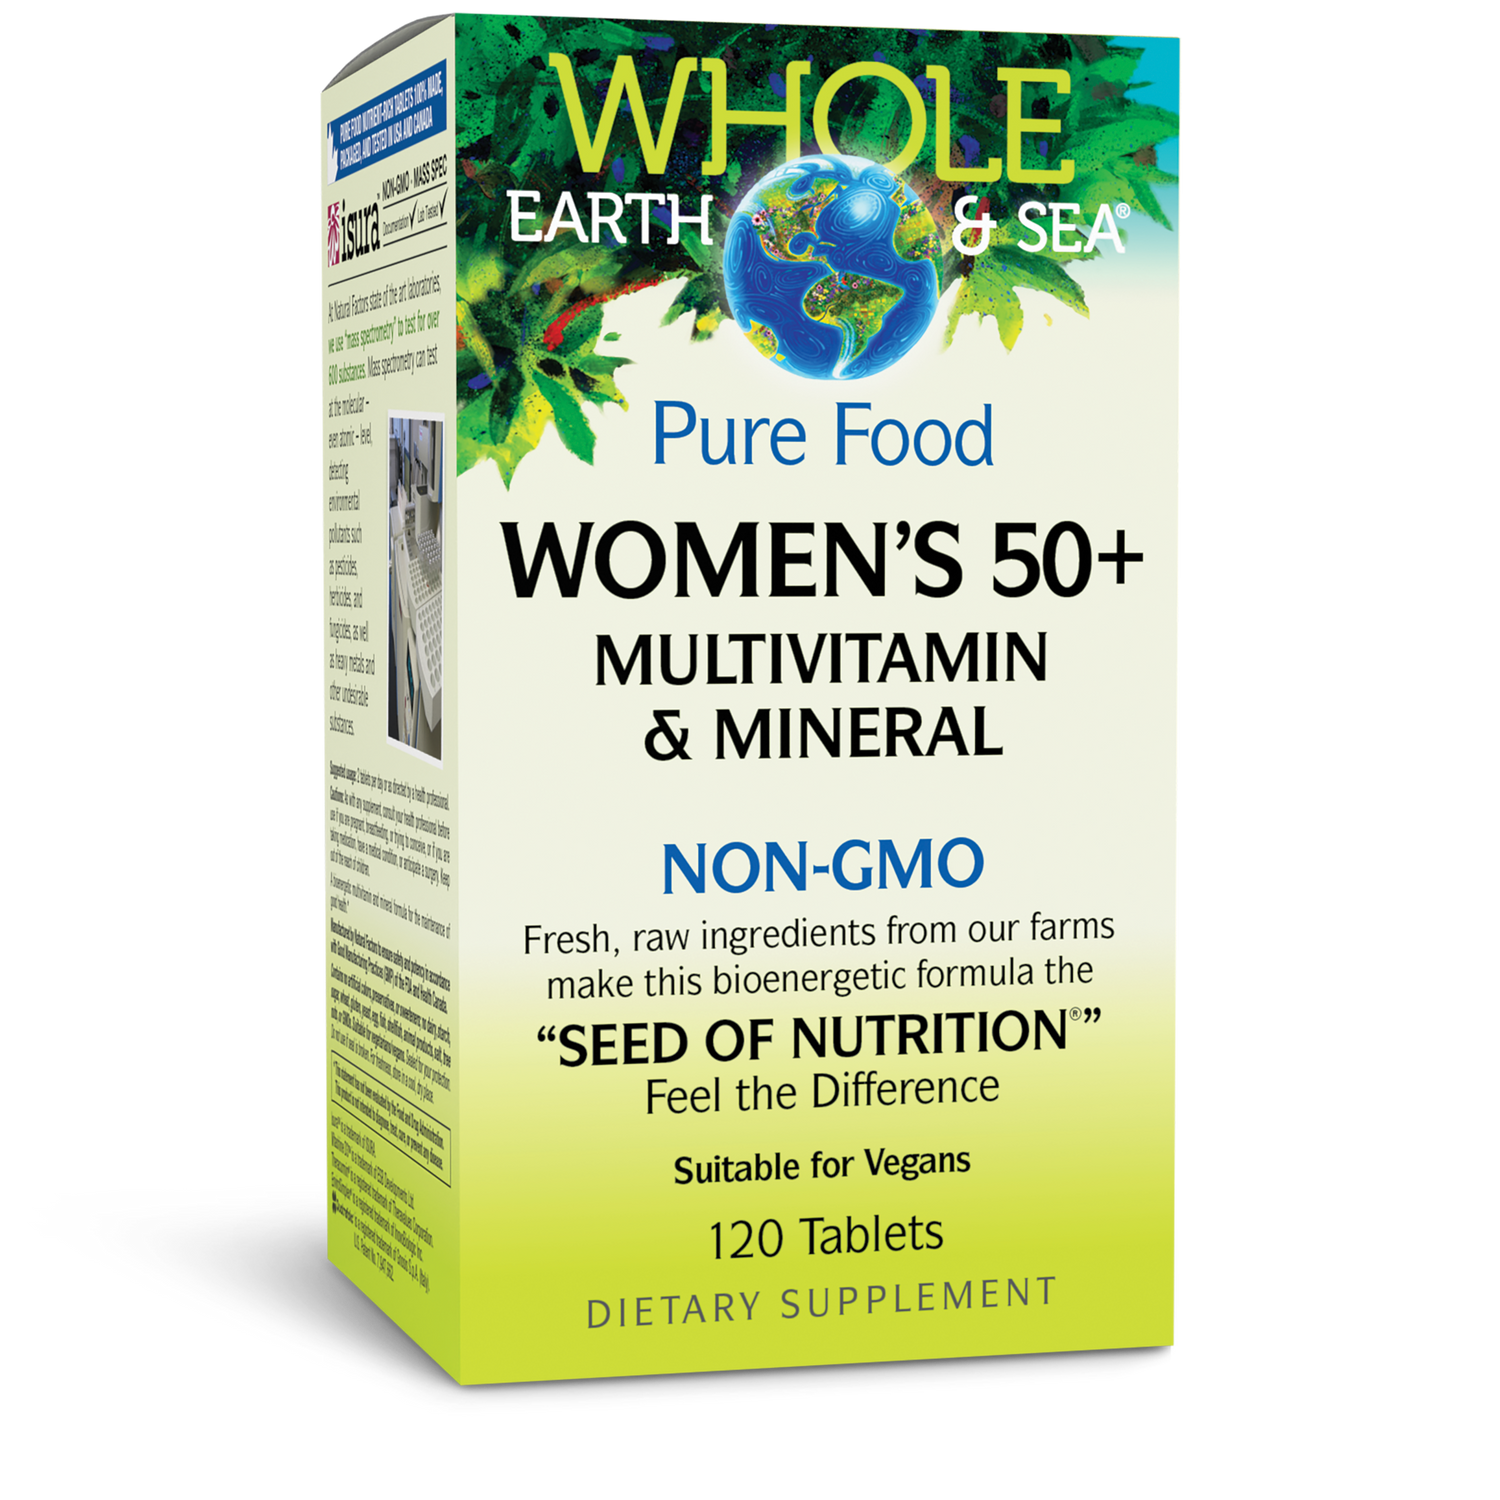 Women's 50+ Multivitamin & Mineral|variant|hi-res|35519U